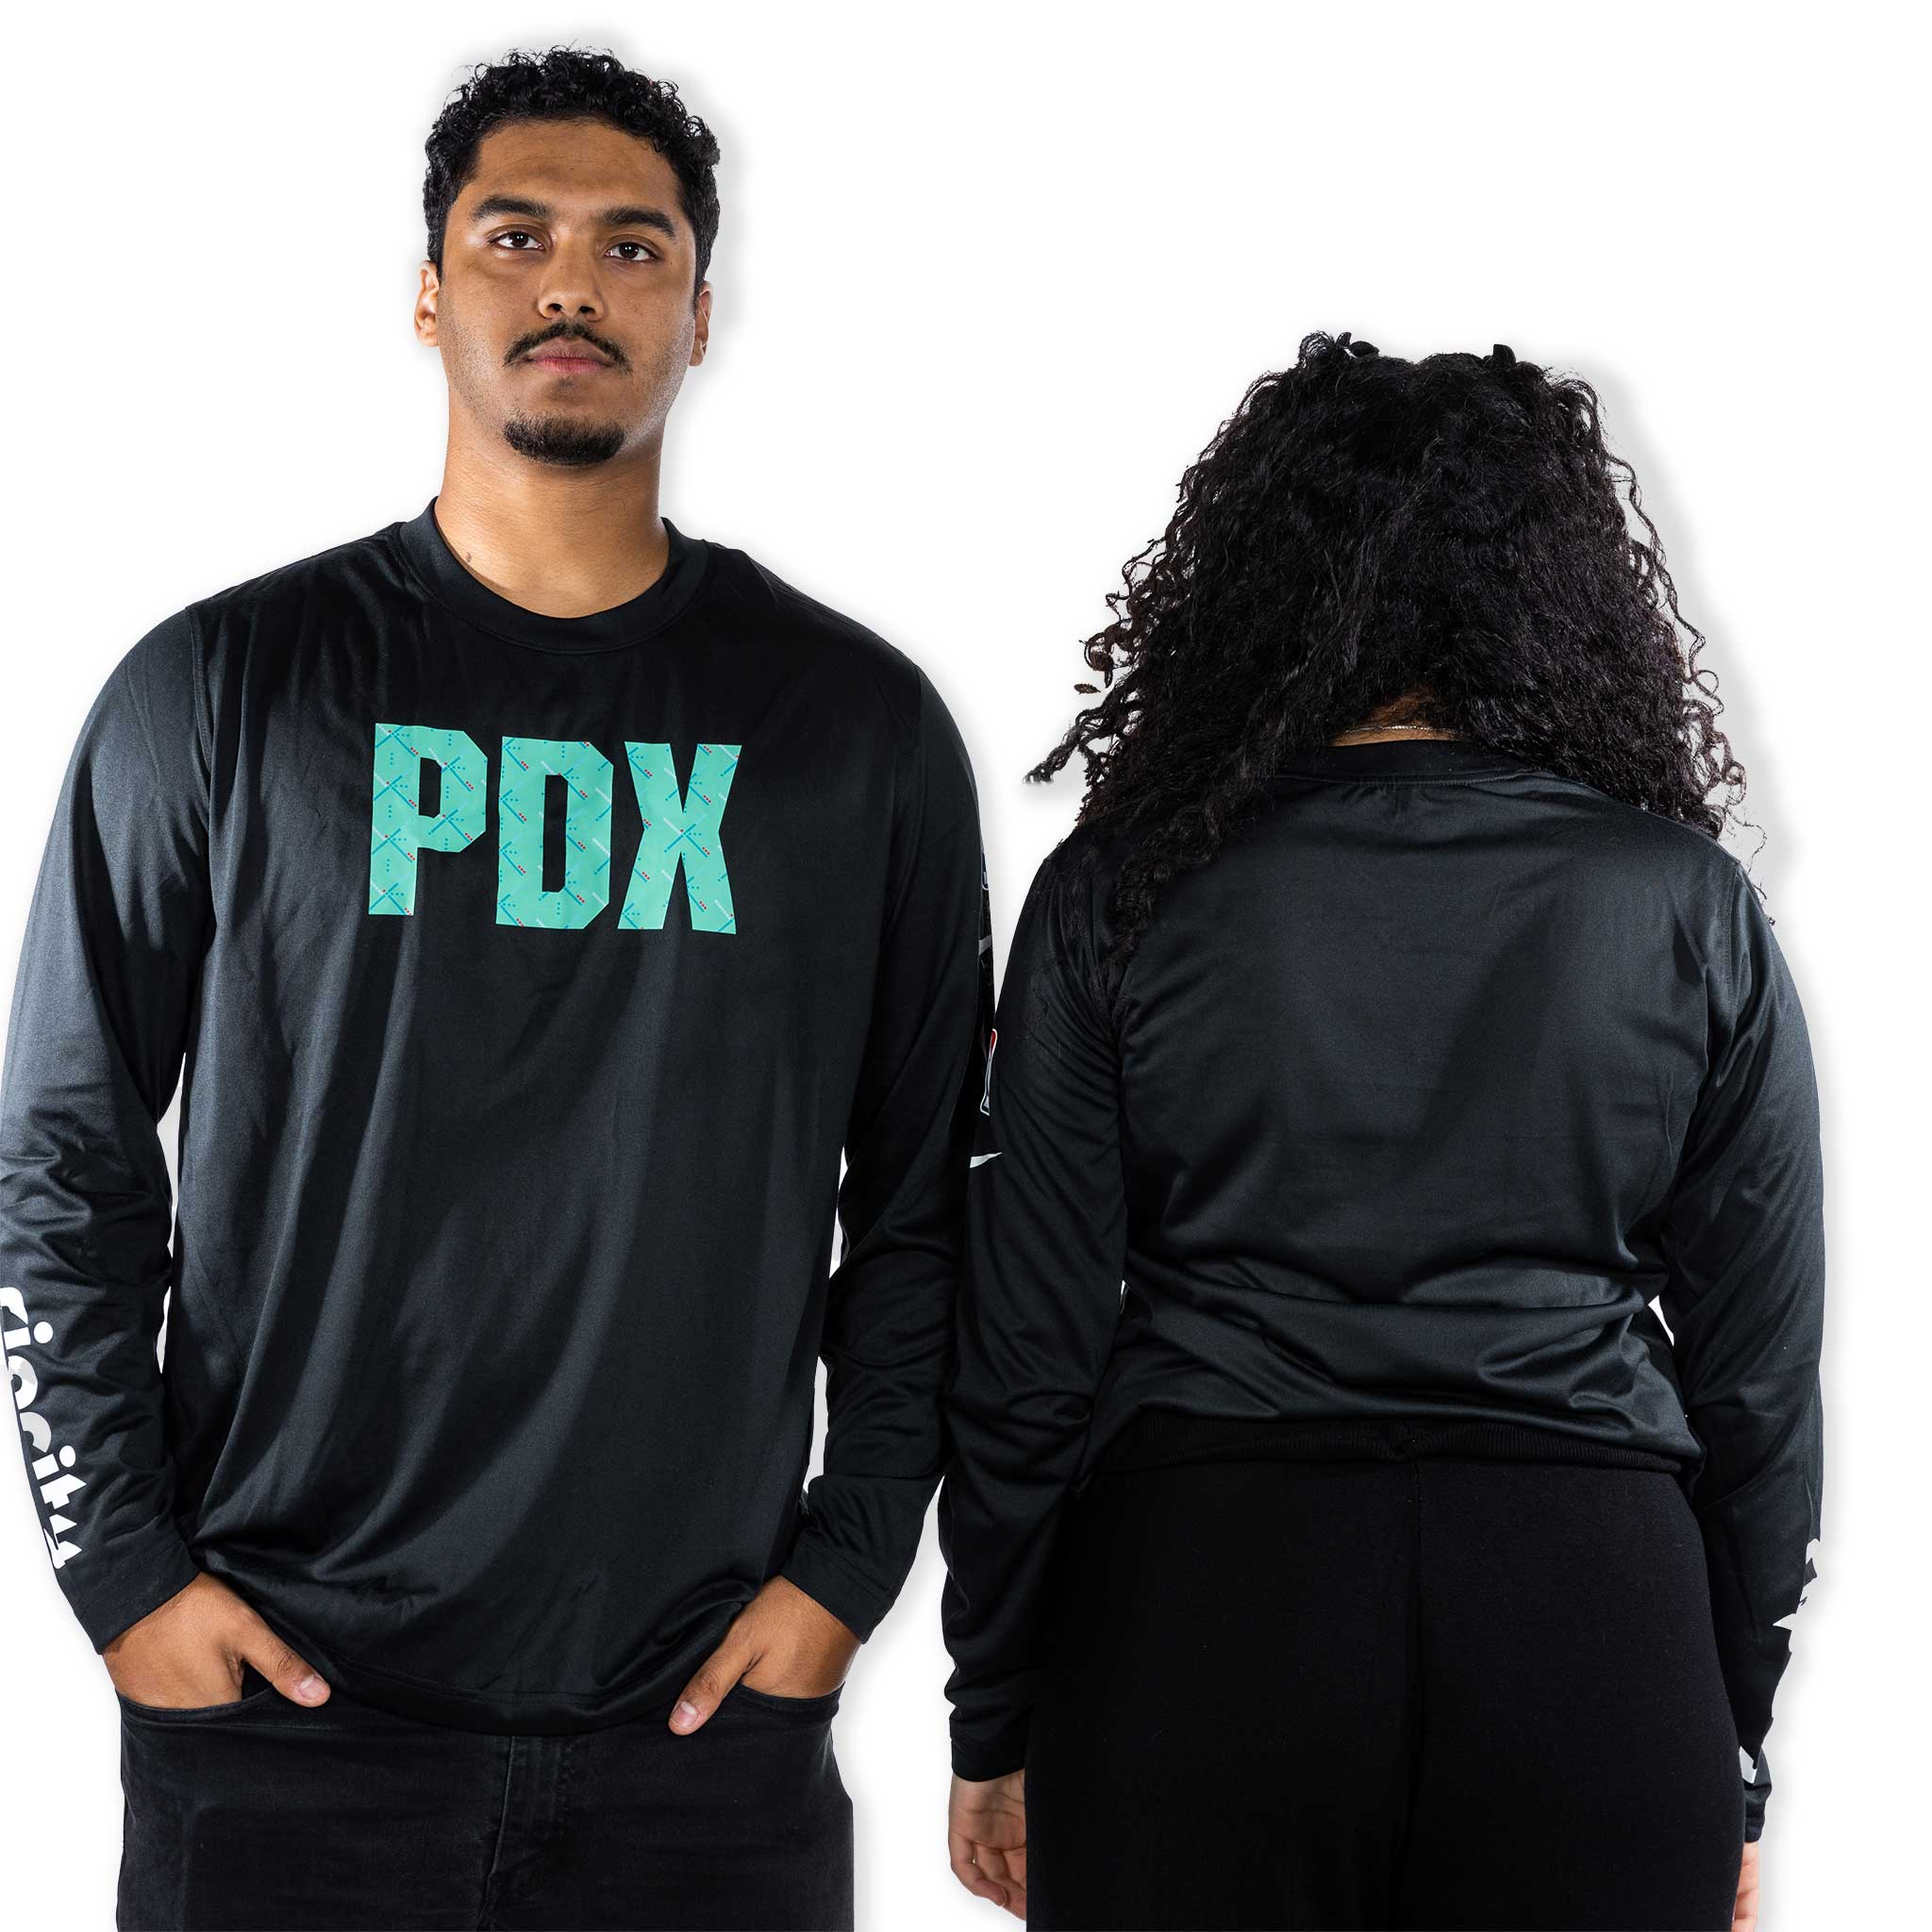 Trail Blazers Nike PDX City Edition Pregame Long Sleeve T-Shirt